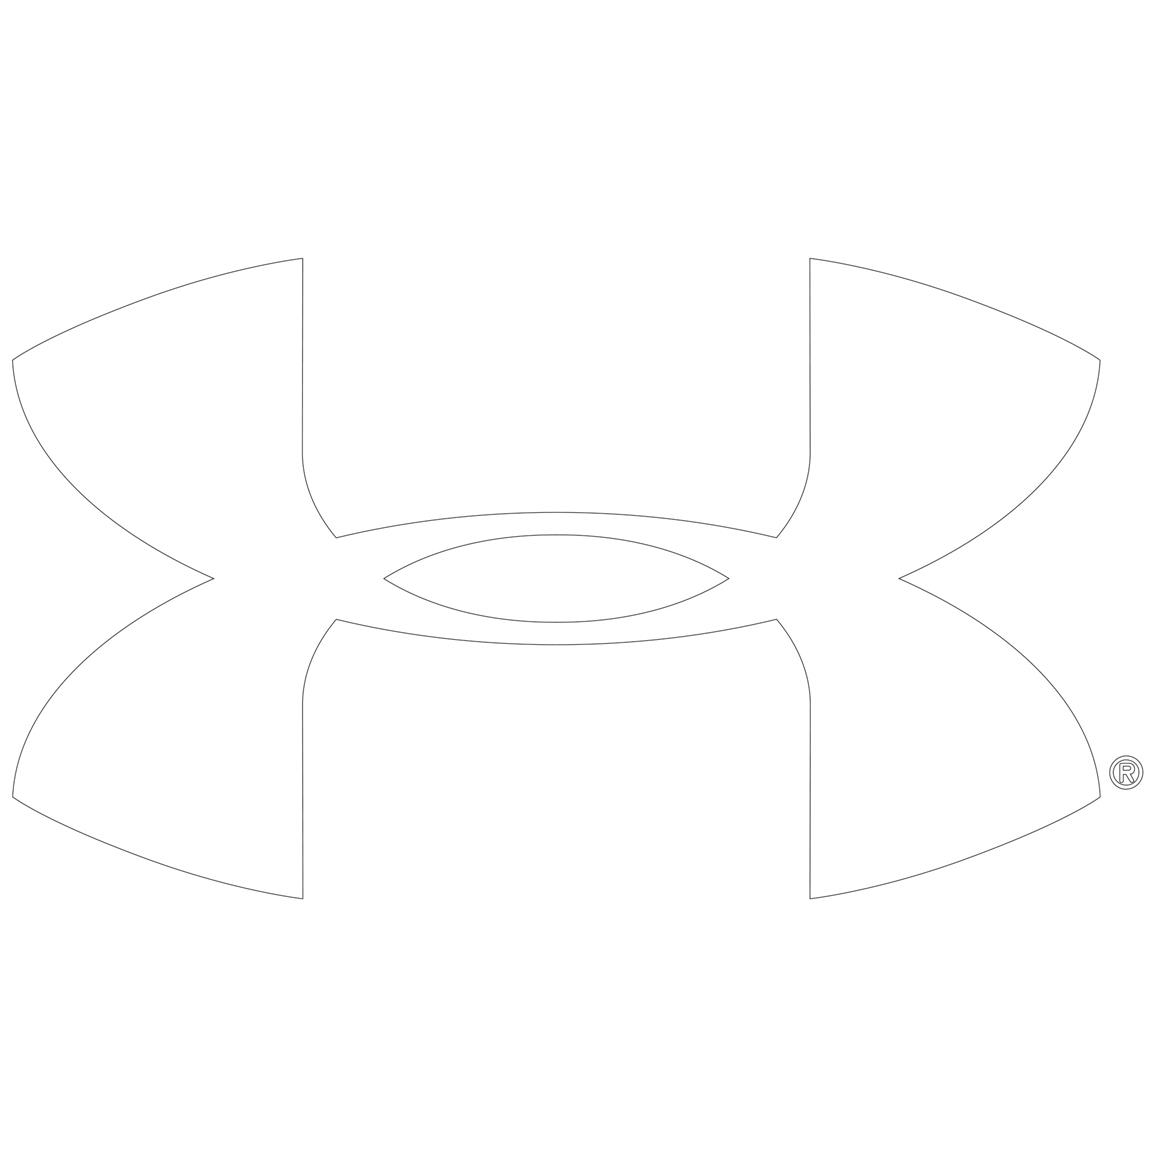 Ua logo modern design Royalty Free Vector Image